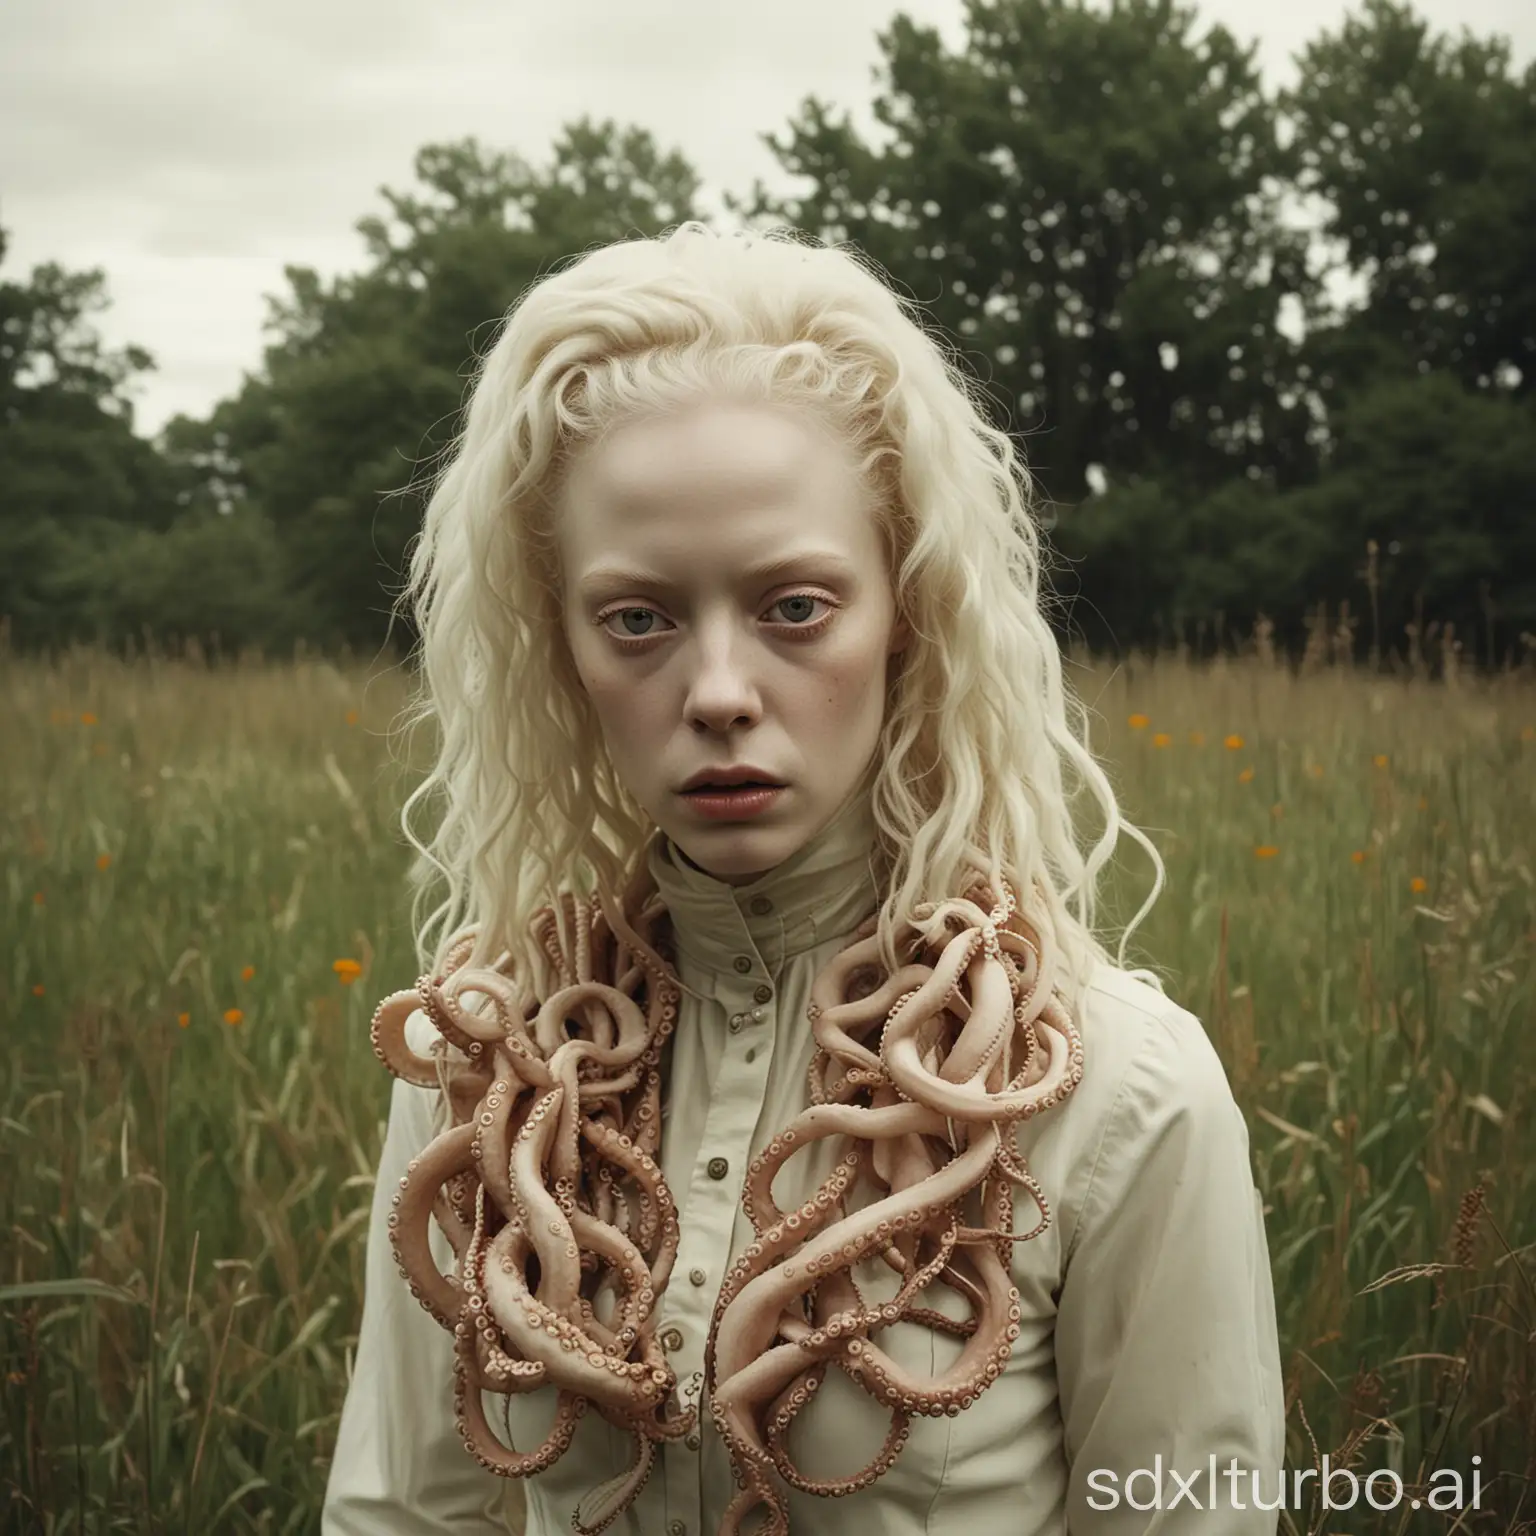 Eerie-Albino-Woman-with-Octopus-Head-in-Vintage-Meadow